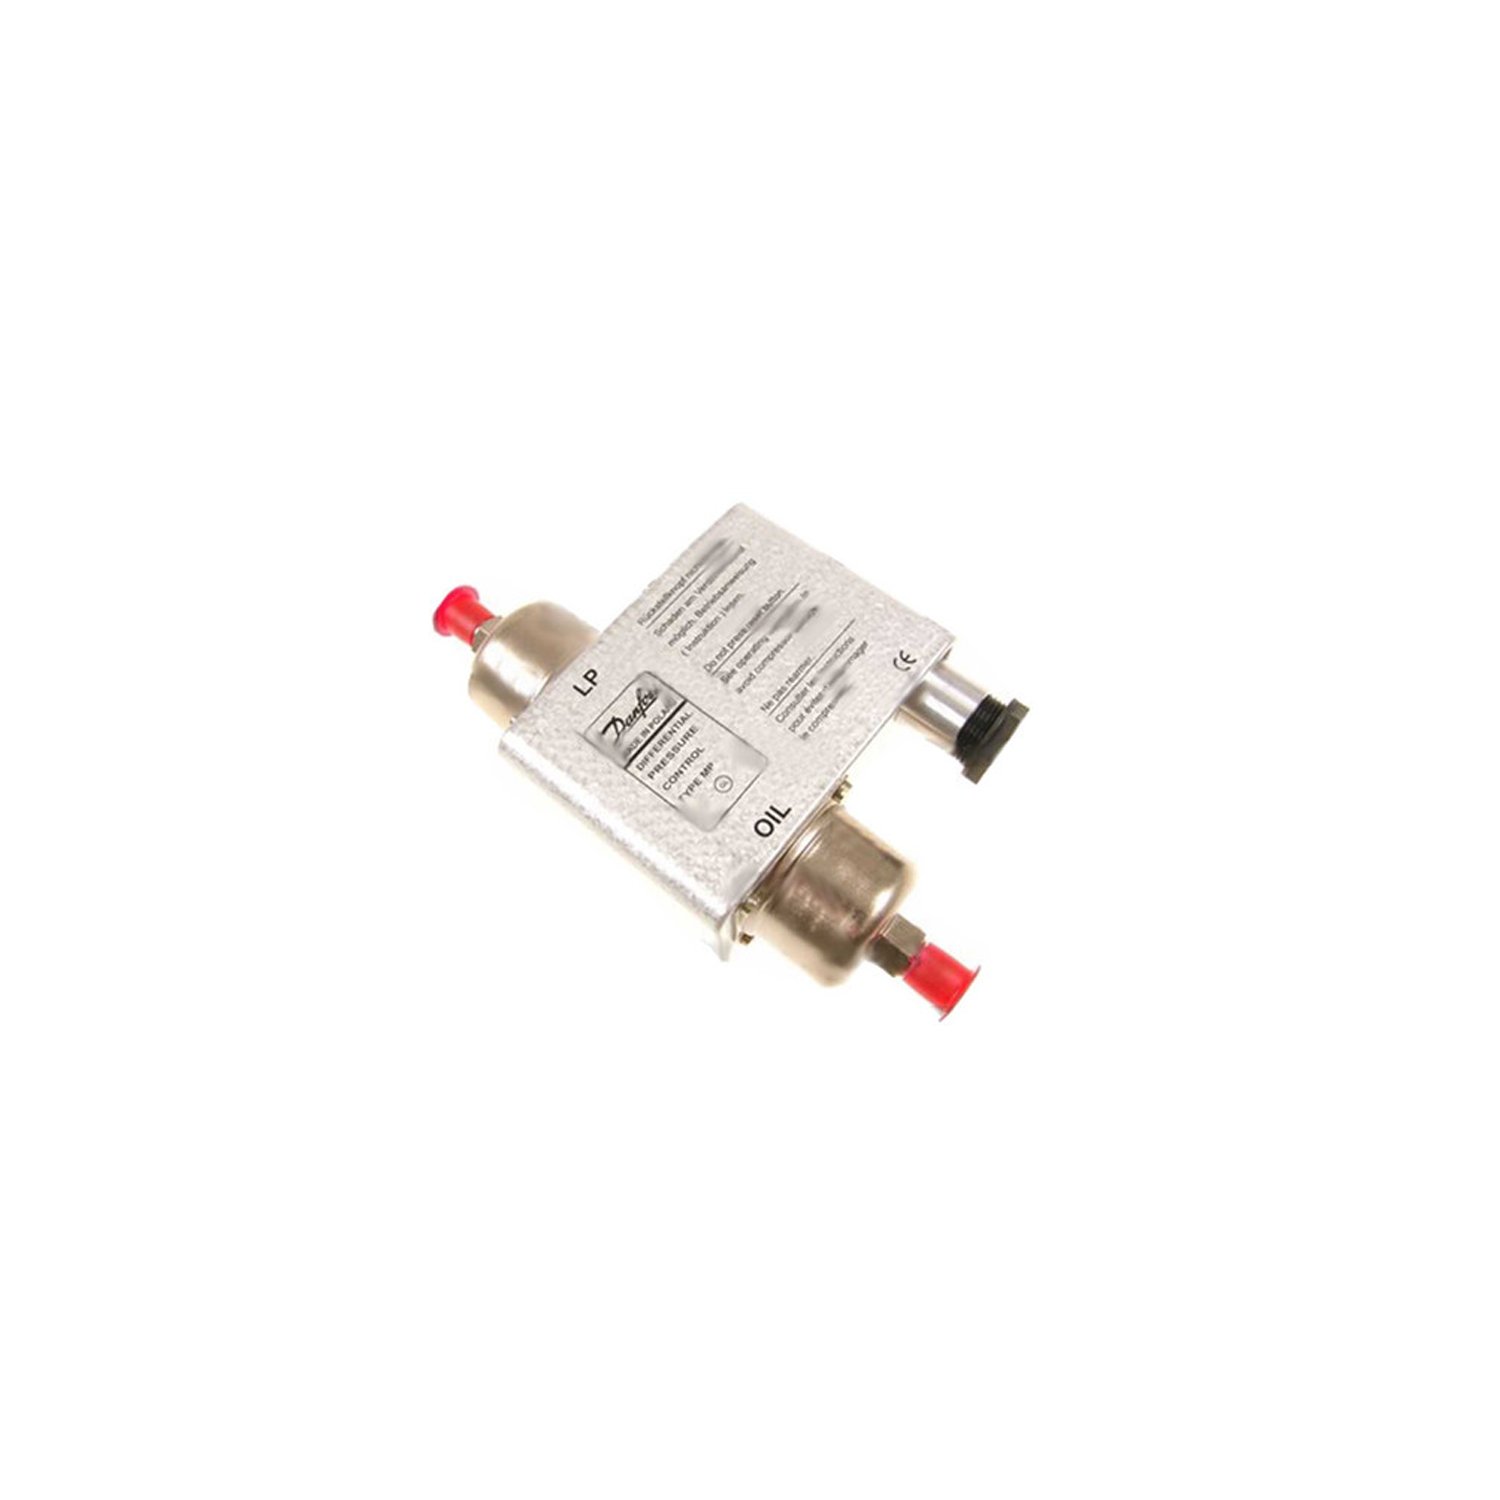 Differential pressure switch Danfoss MP55 - 120 sec, 060B017366